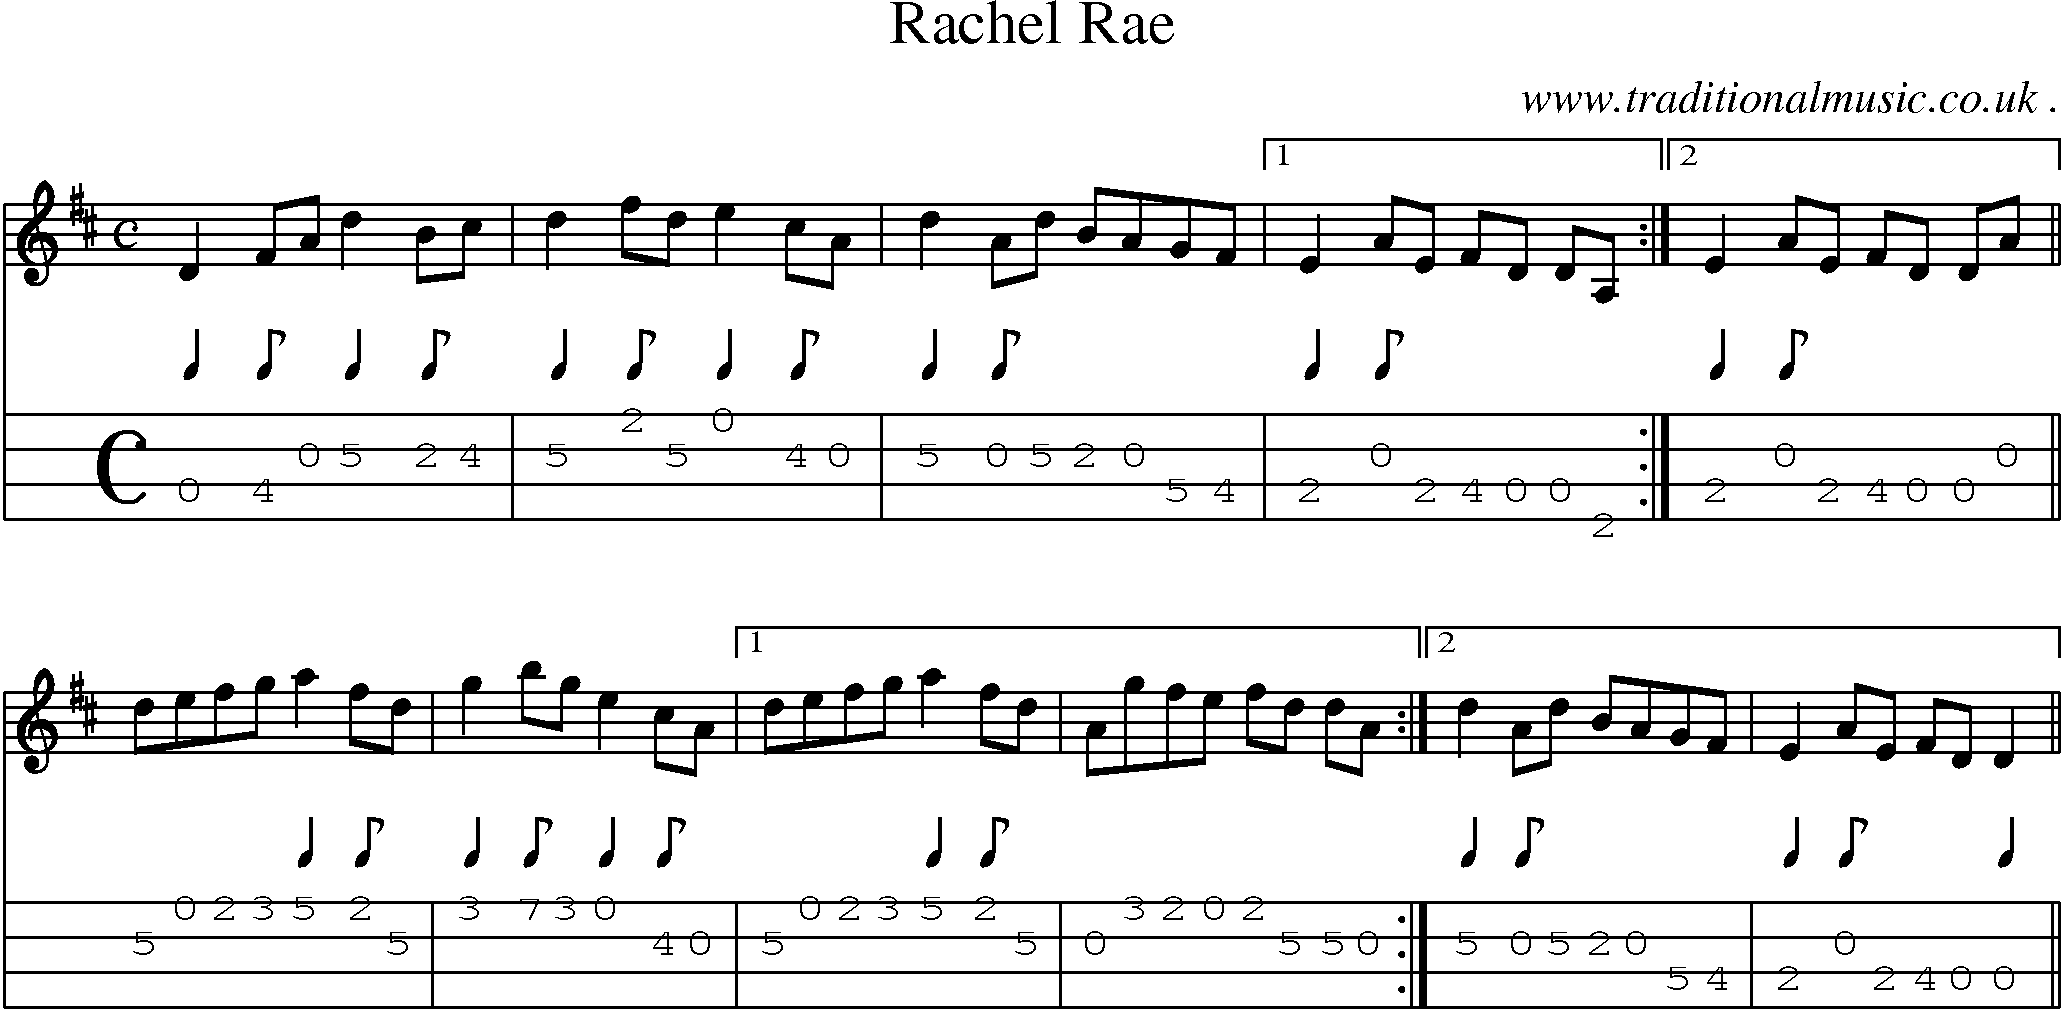 Sheet-Music and Mandolin Tabs for Rachel Rae